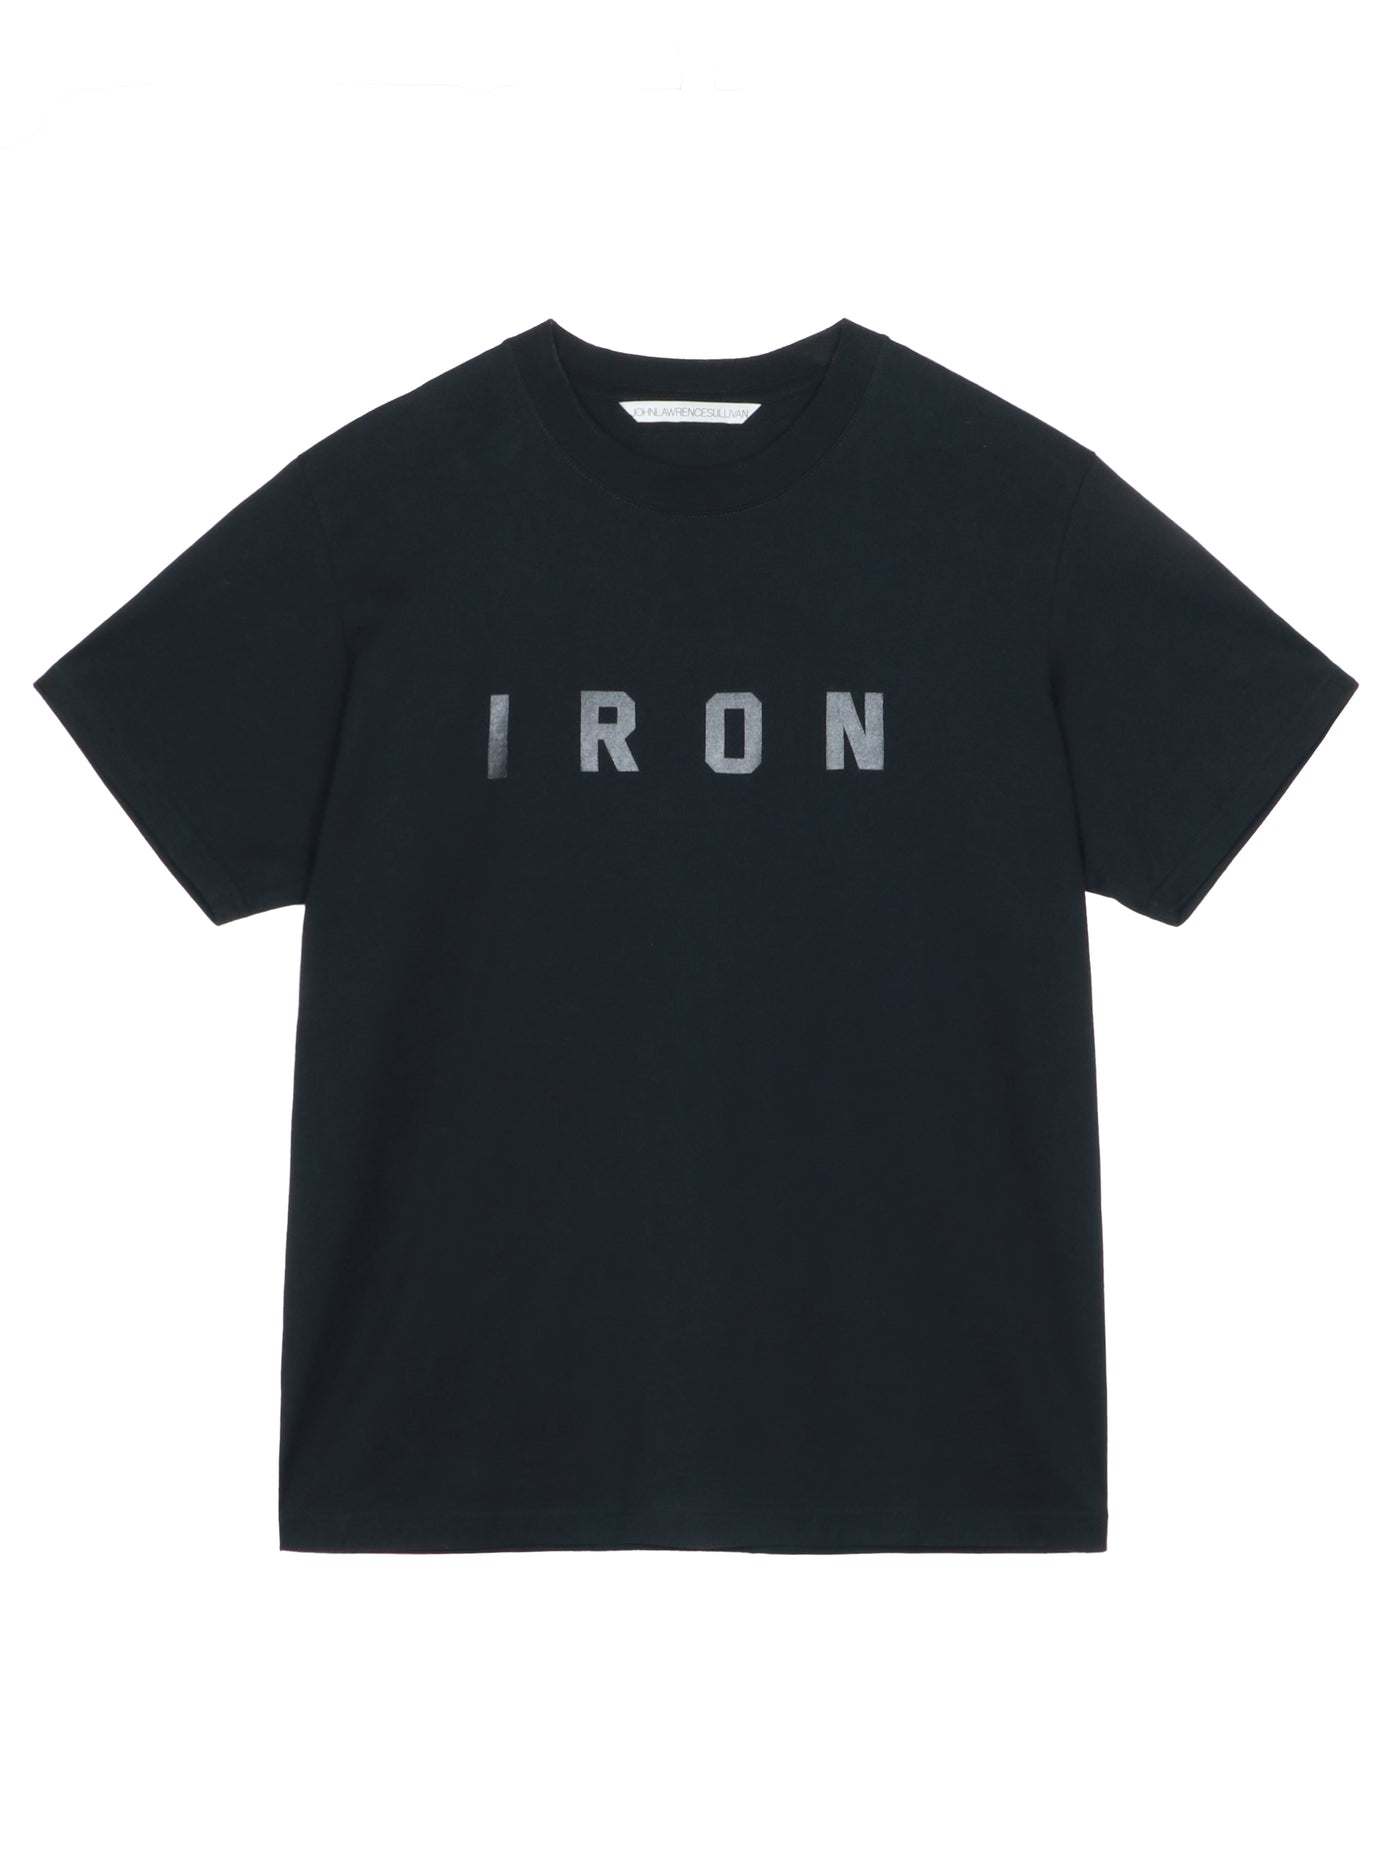 "Iron" T-shirt